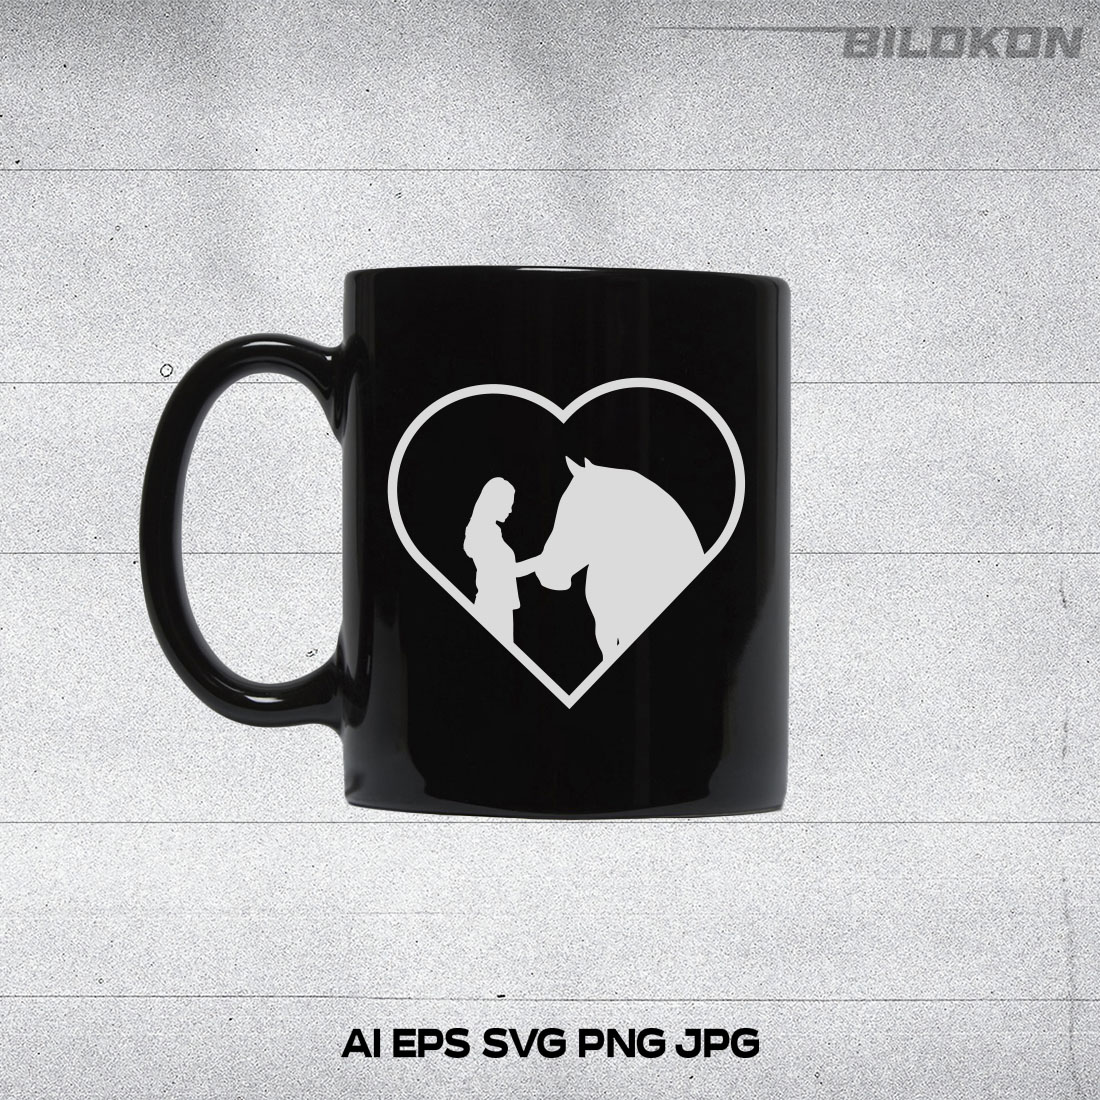 Black coffee mug with a horse and a heart.